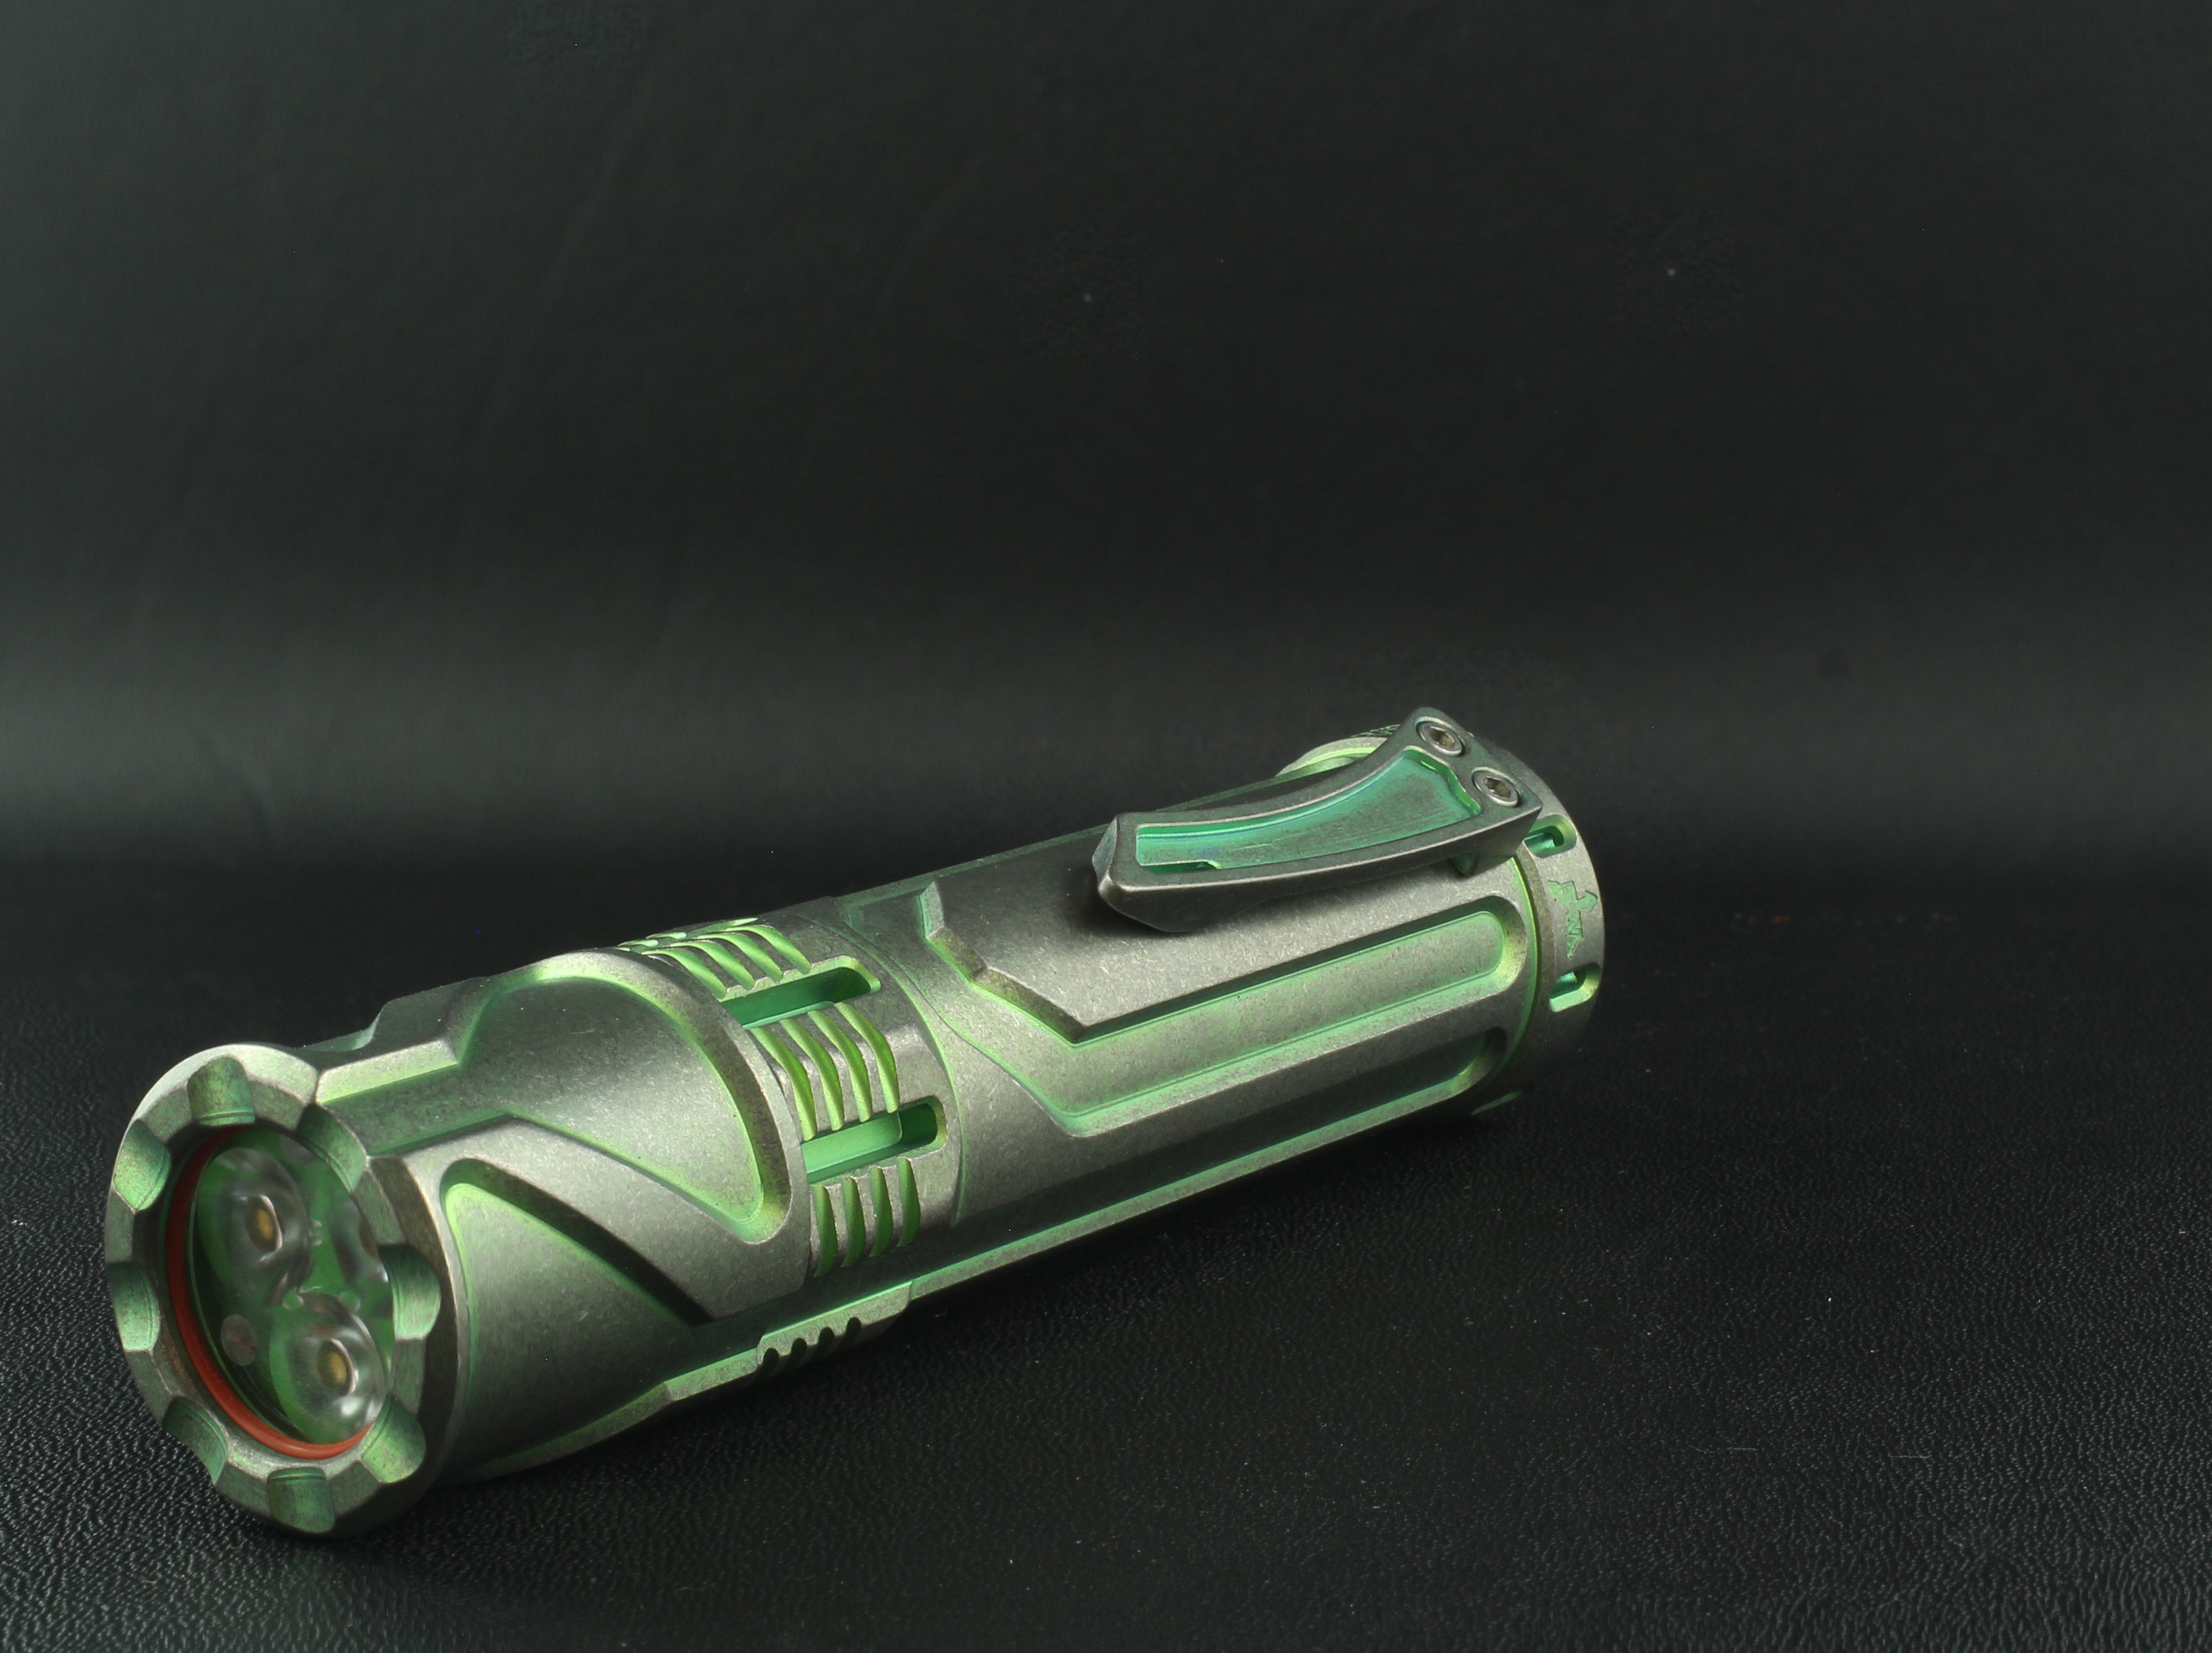 Cylon - Titanium distressed green